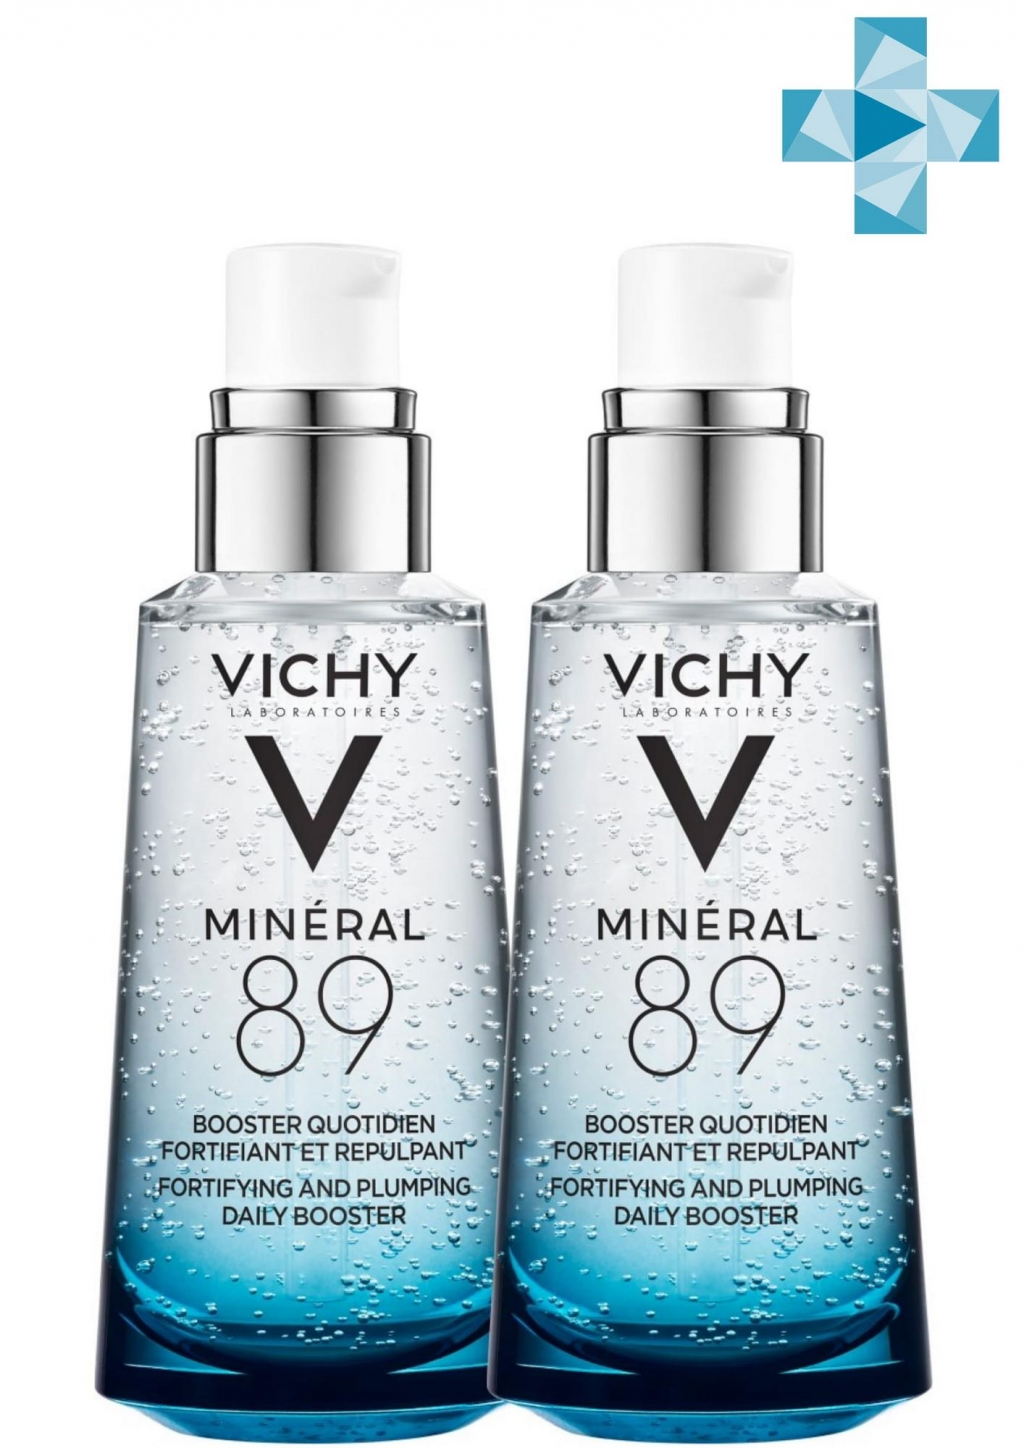 Vichy Ежедневный гель-сыворотка Минерал 89 для кожи, 2х50 мл (Vichy, Mineral 89)